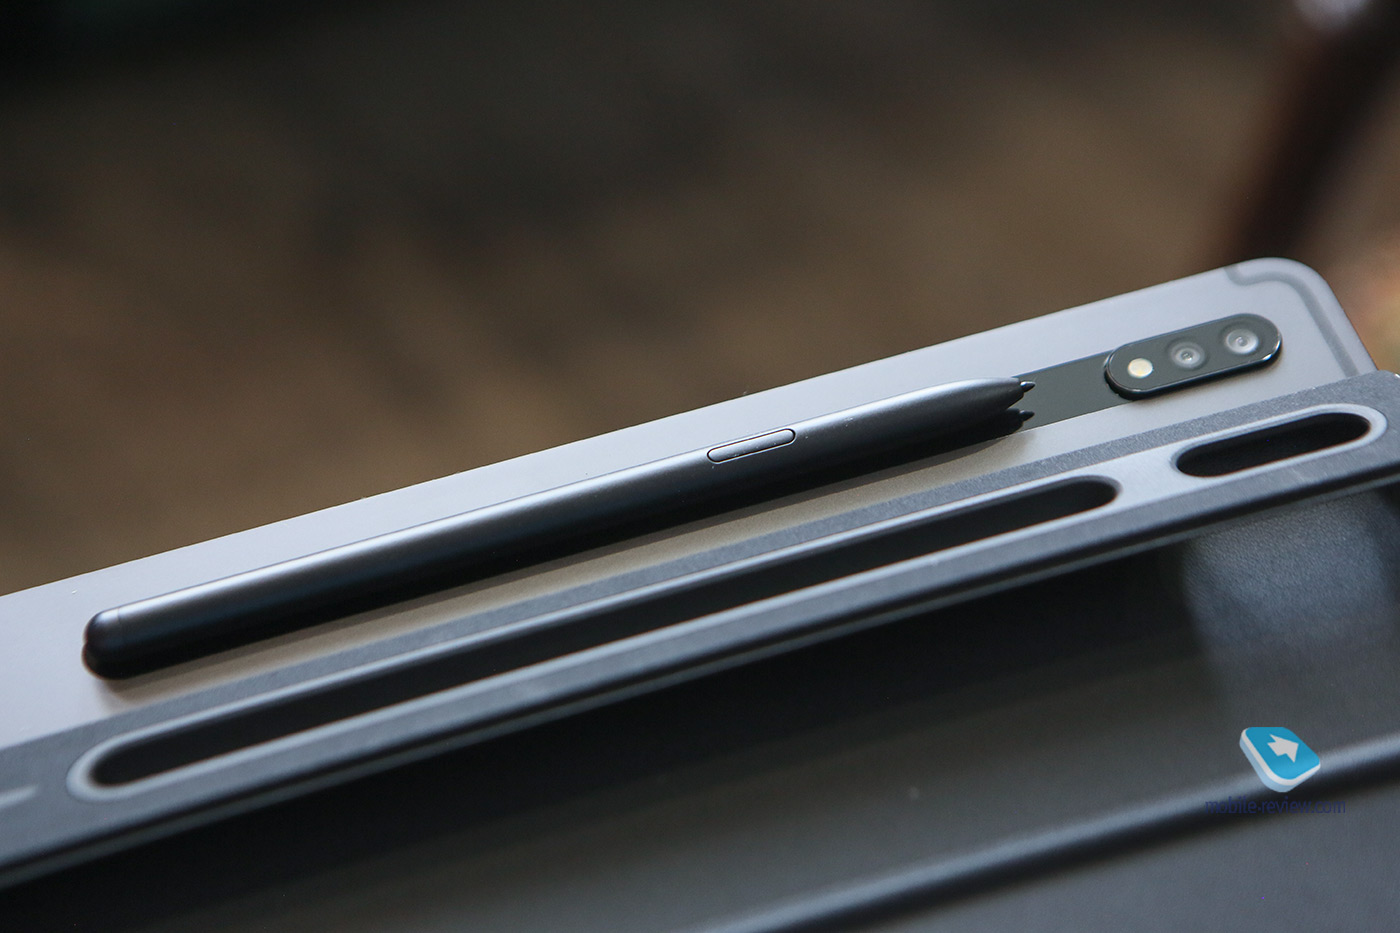 Ten reasons to buy a Samsung Galaxy Tab S7 + tablet